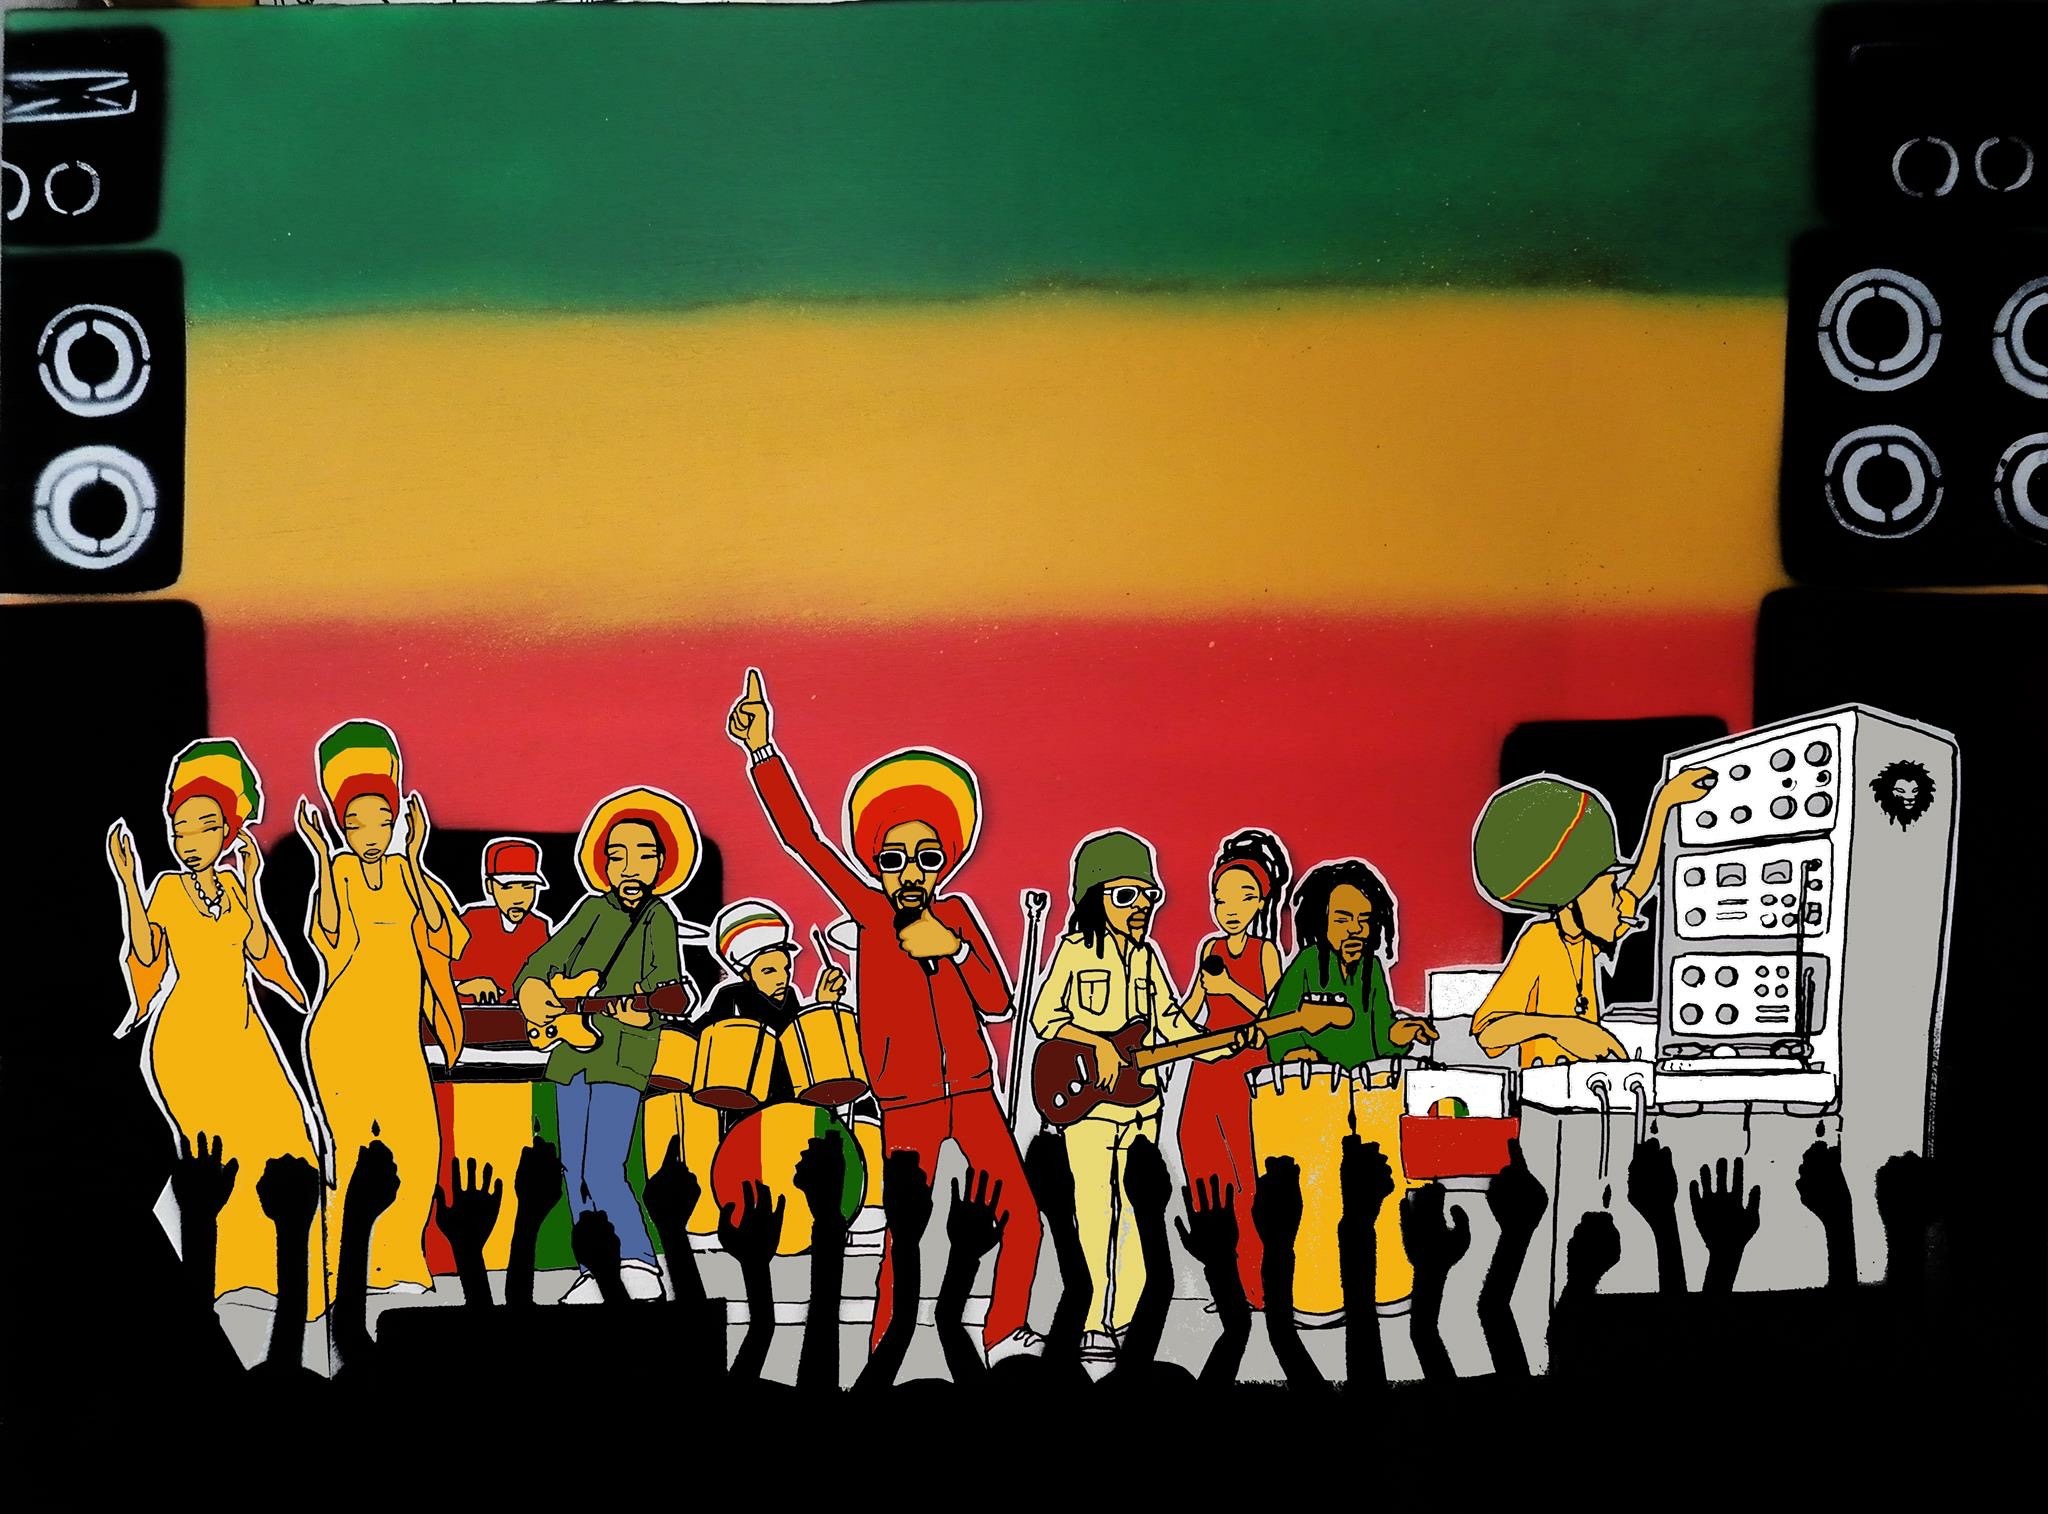 Reggae Club